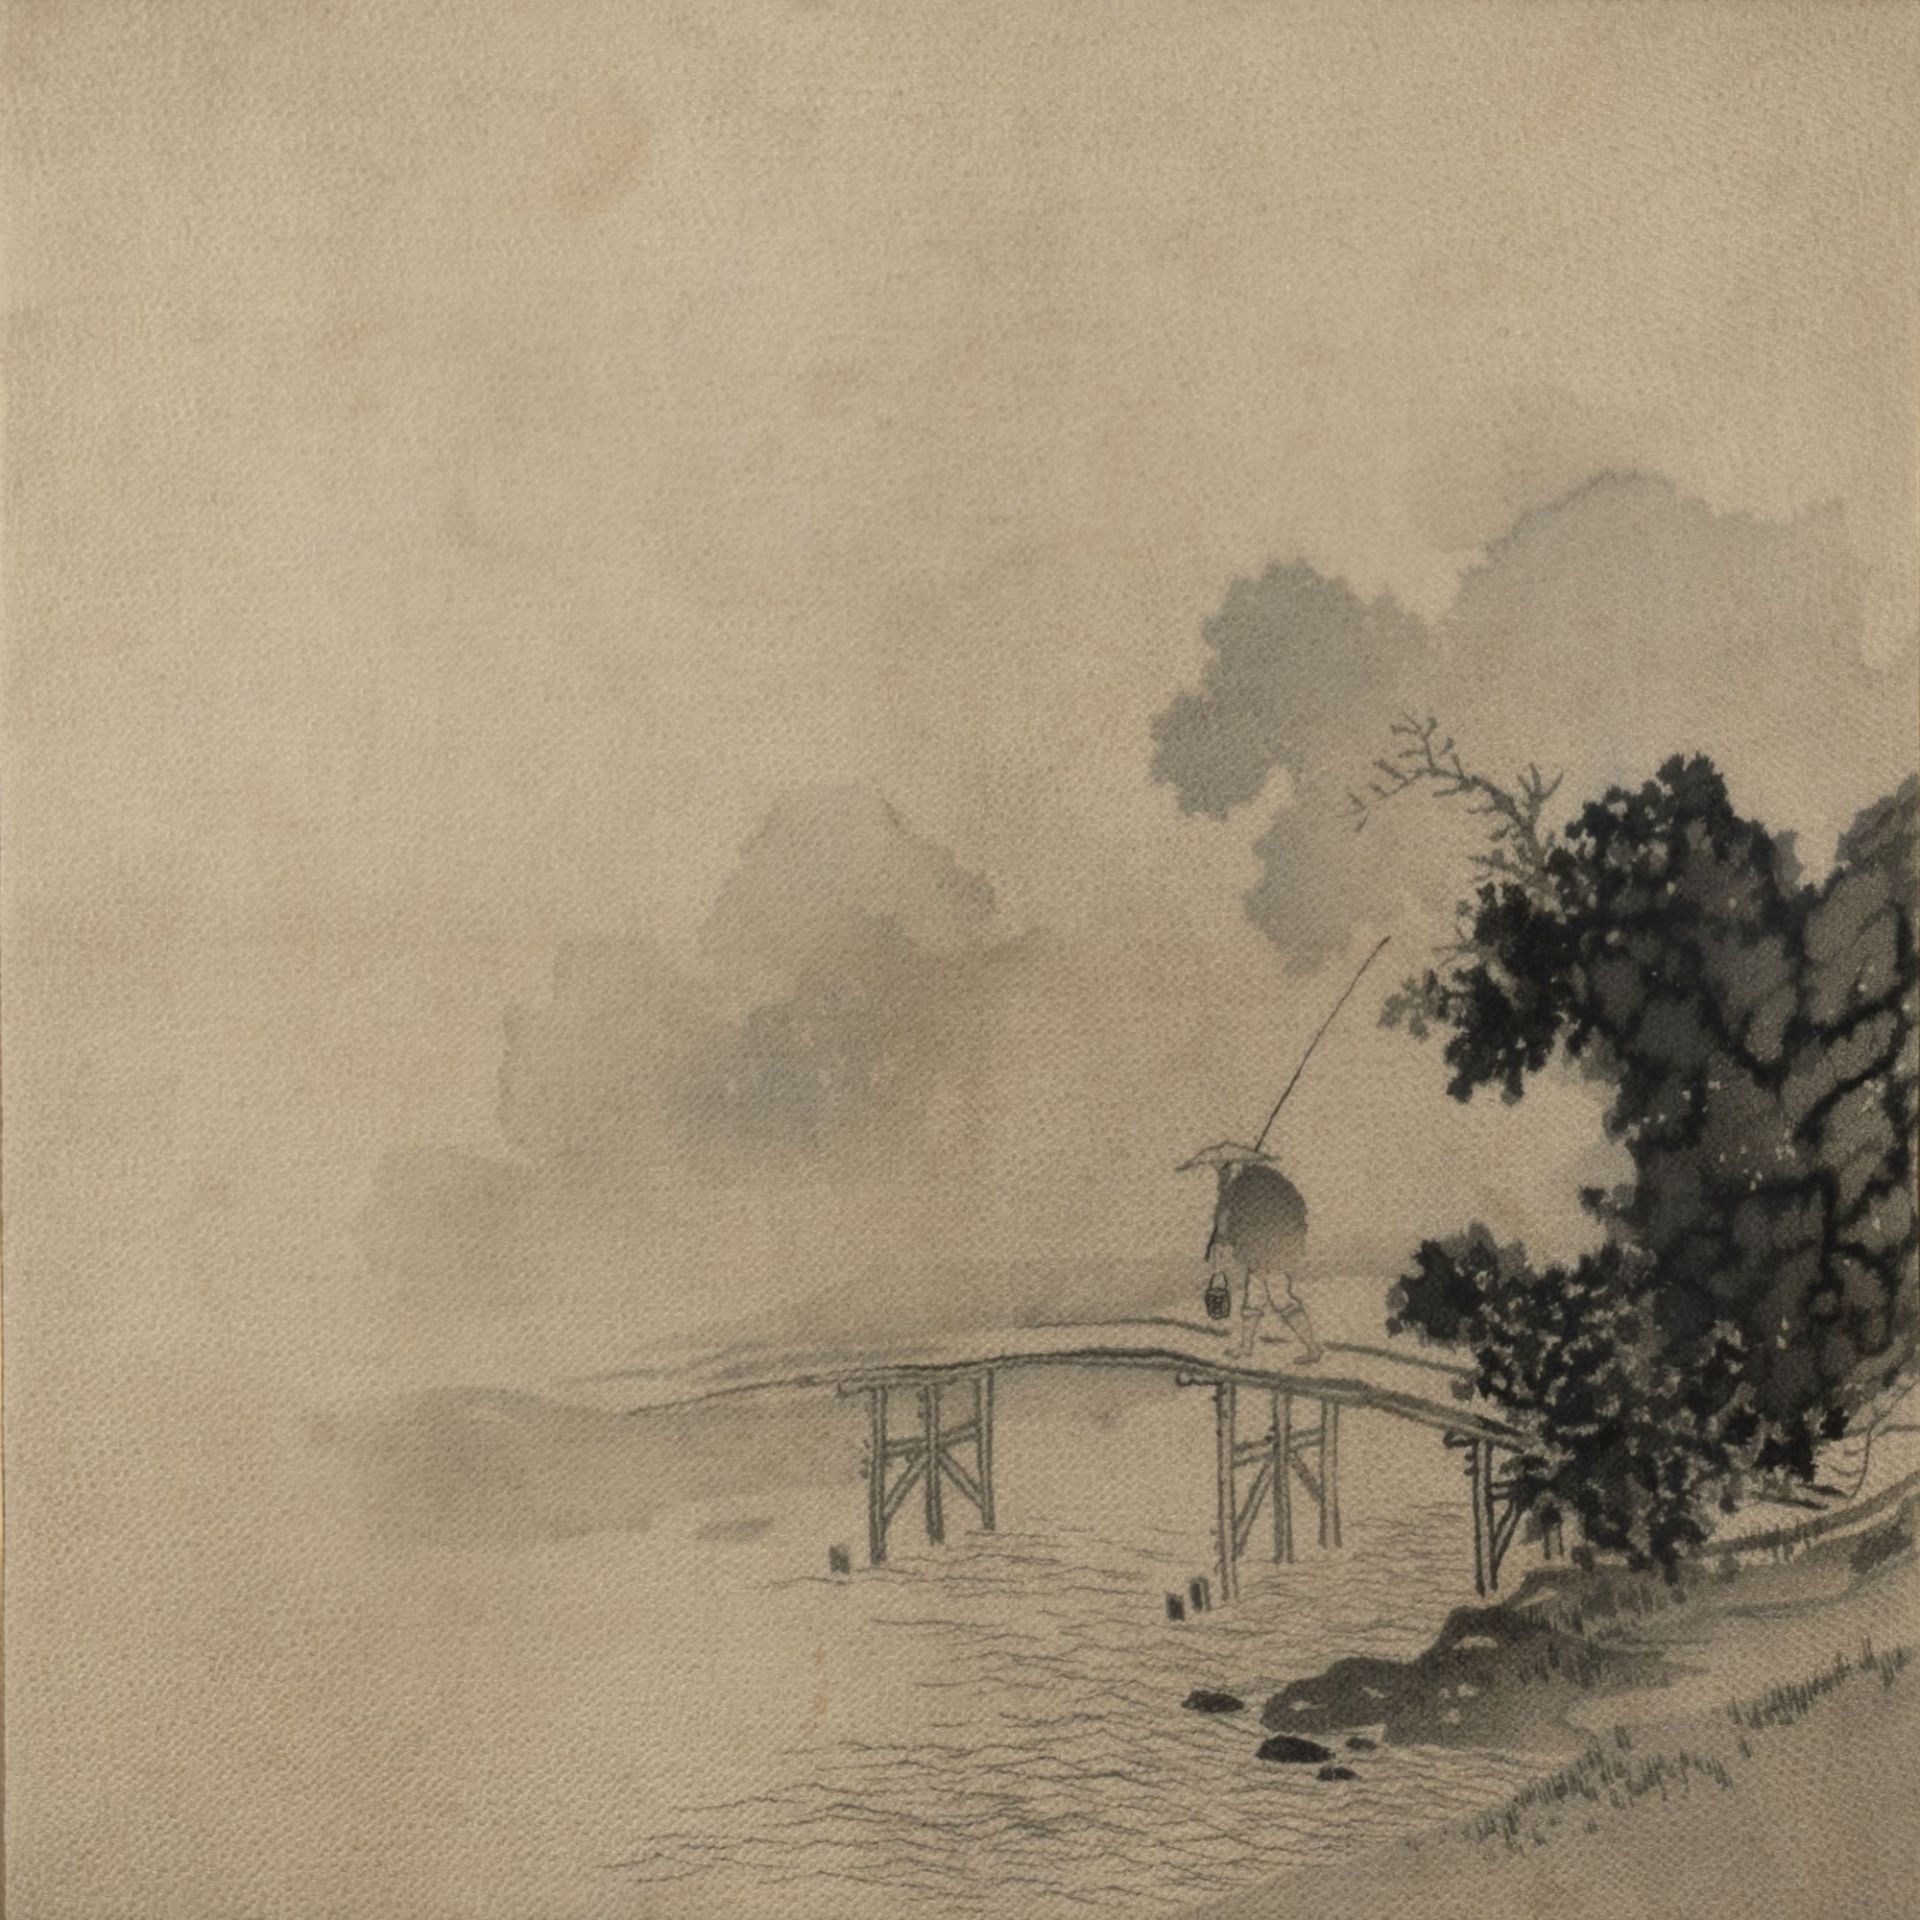 Print on fabric representing a traveler on a bridge, 20th century - Image 2 of 3